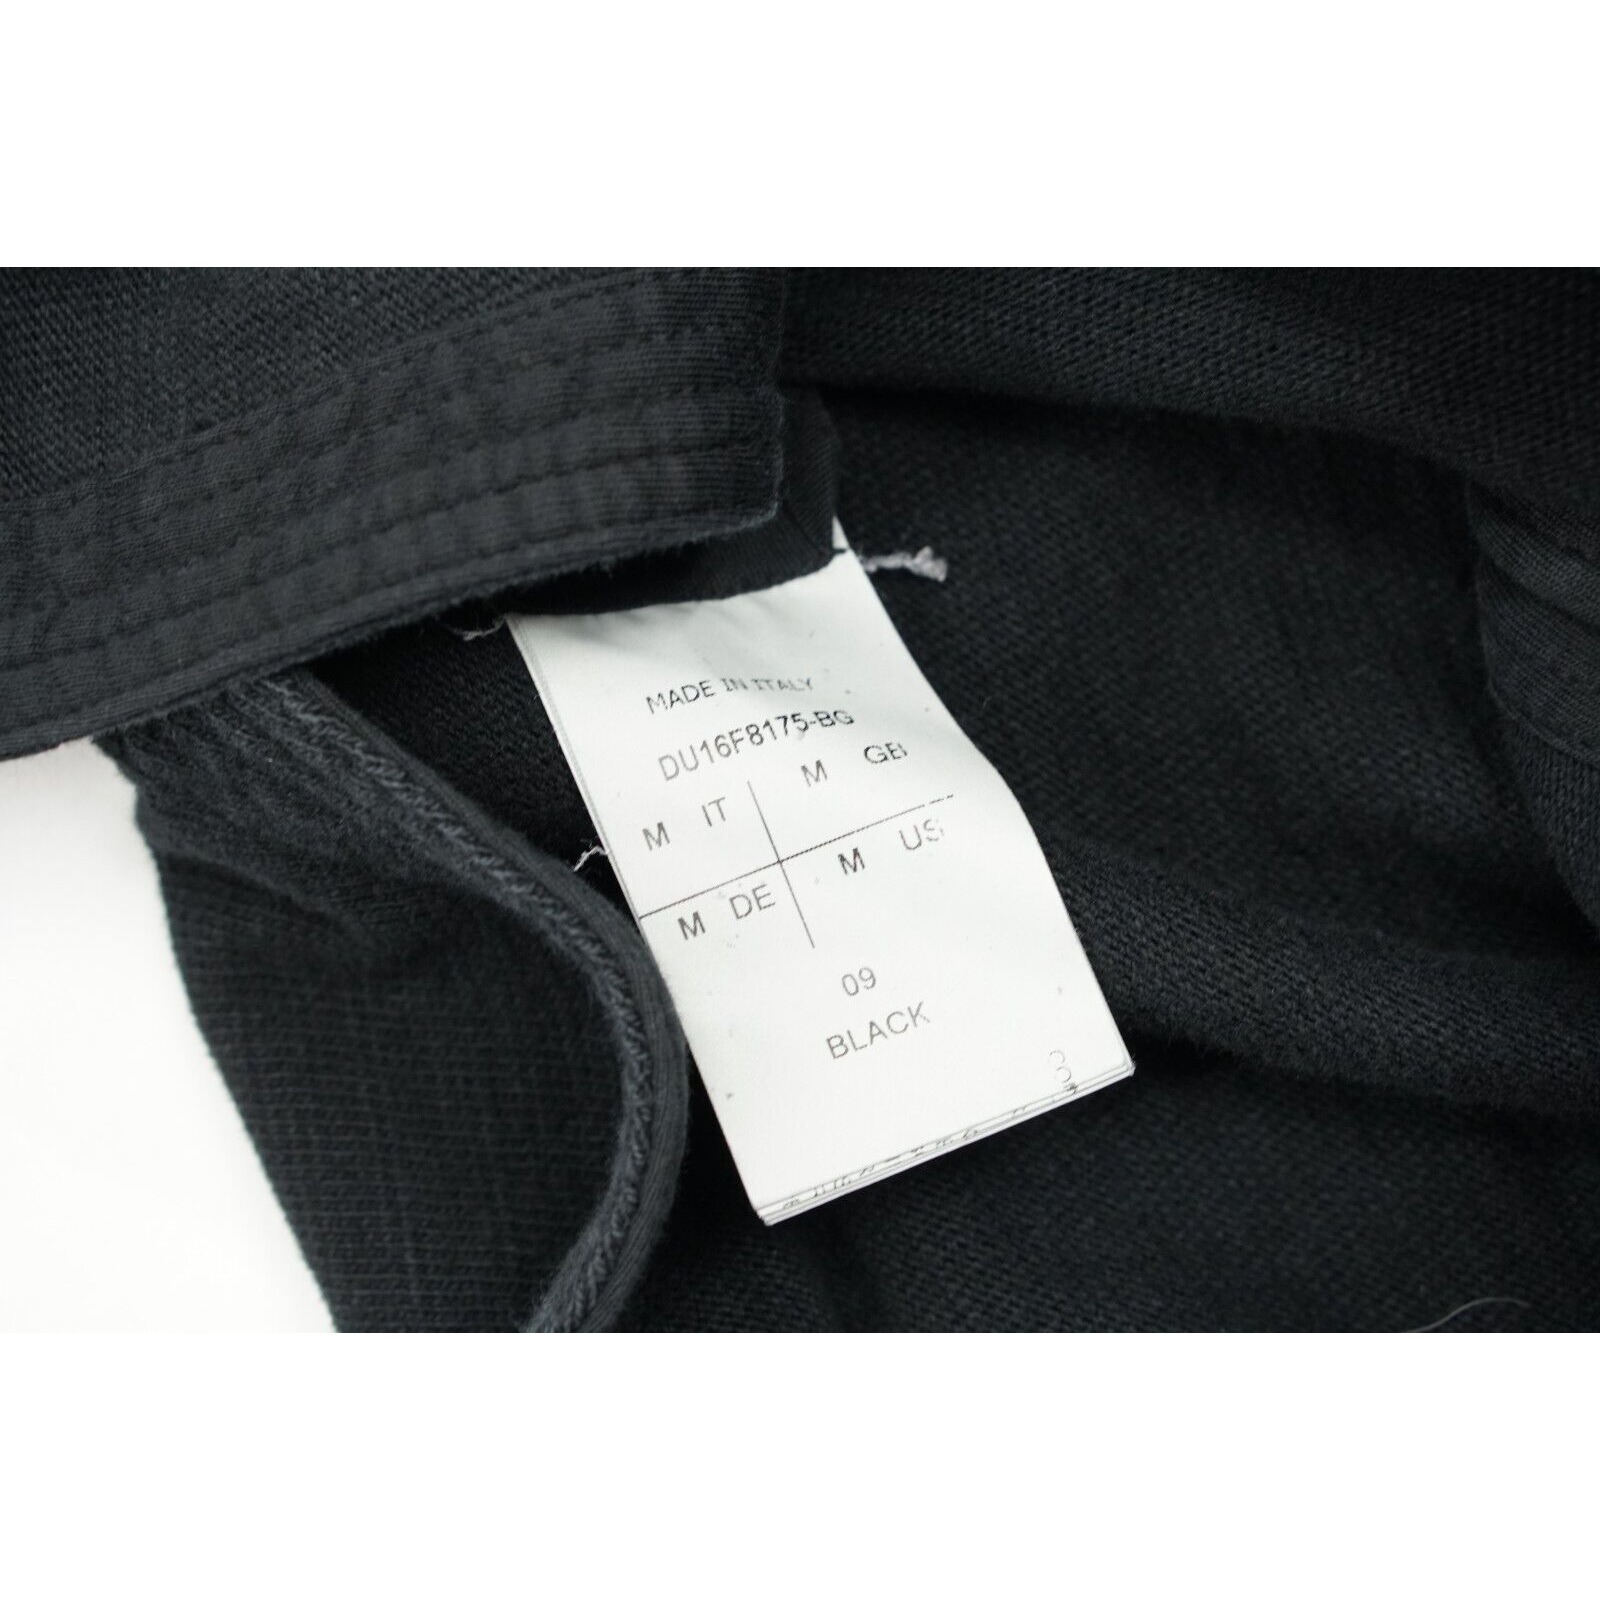 Black Zip Up Sleeveless Jacket Hoodie Cotton - Medium - 7